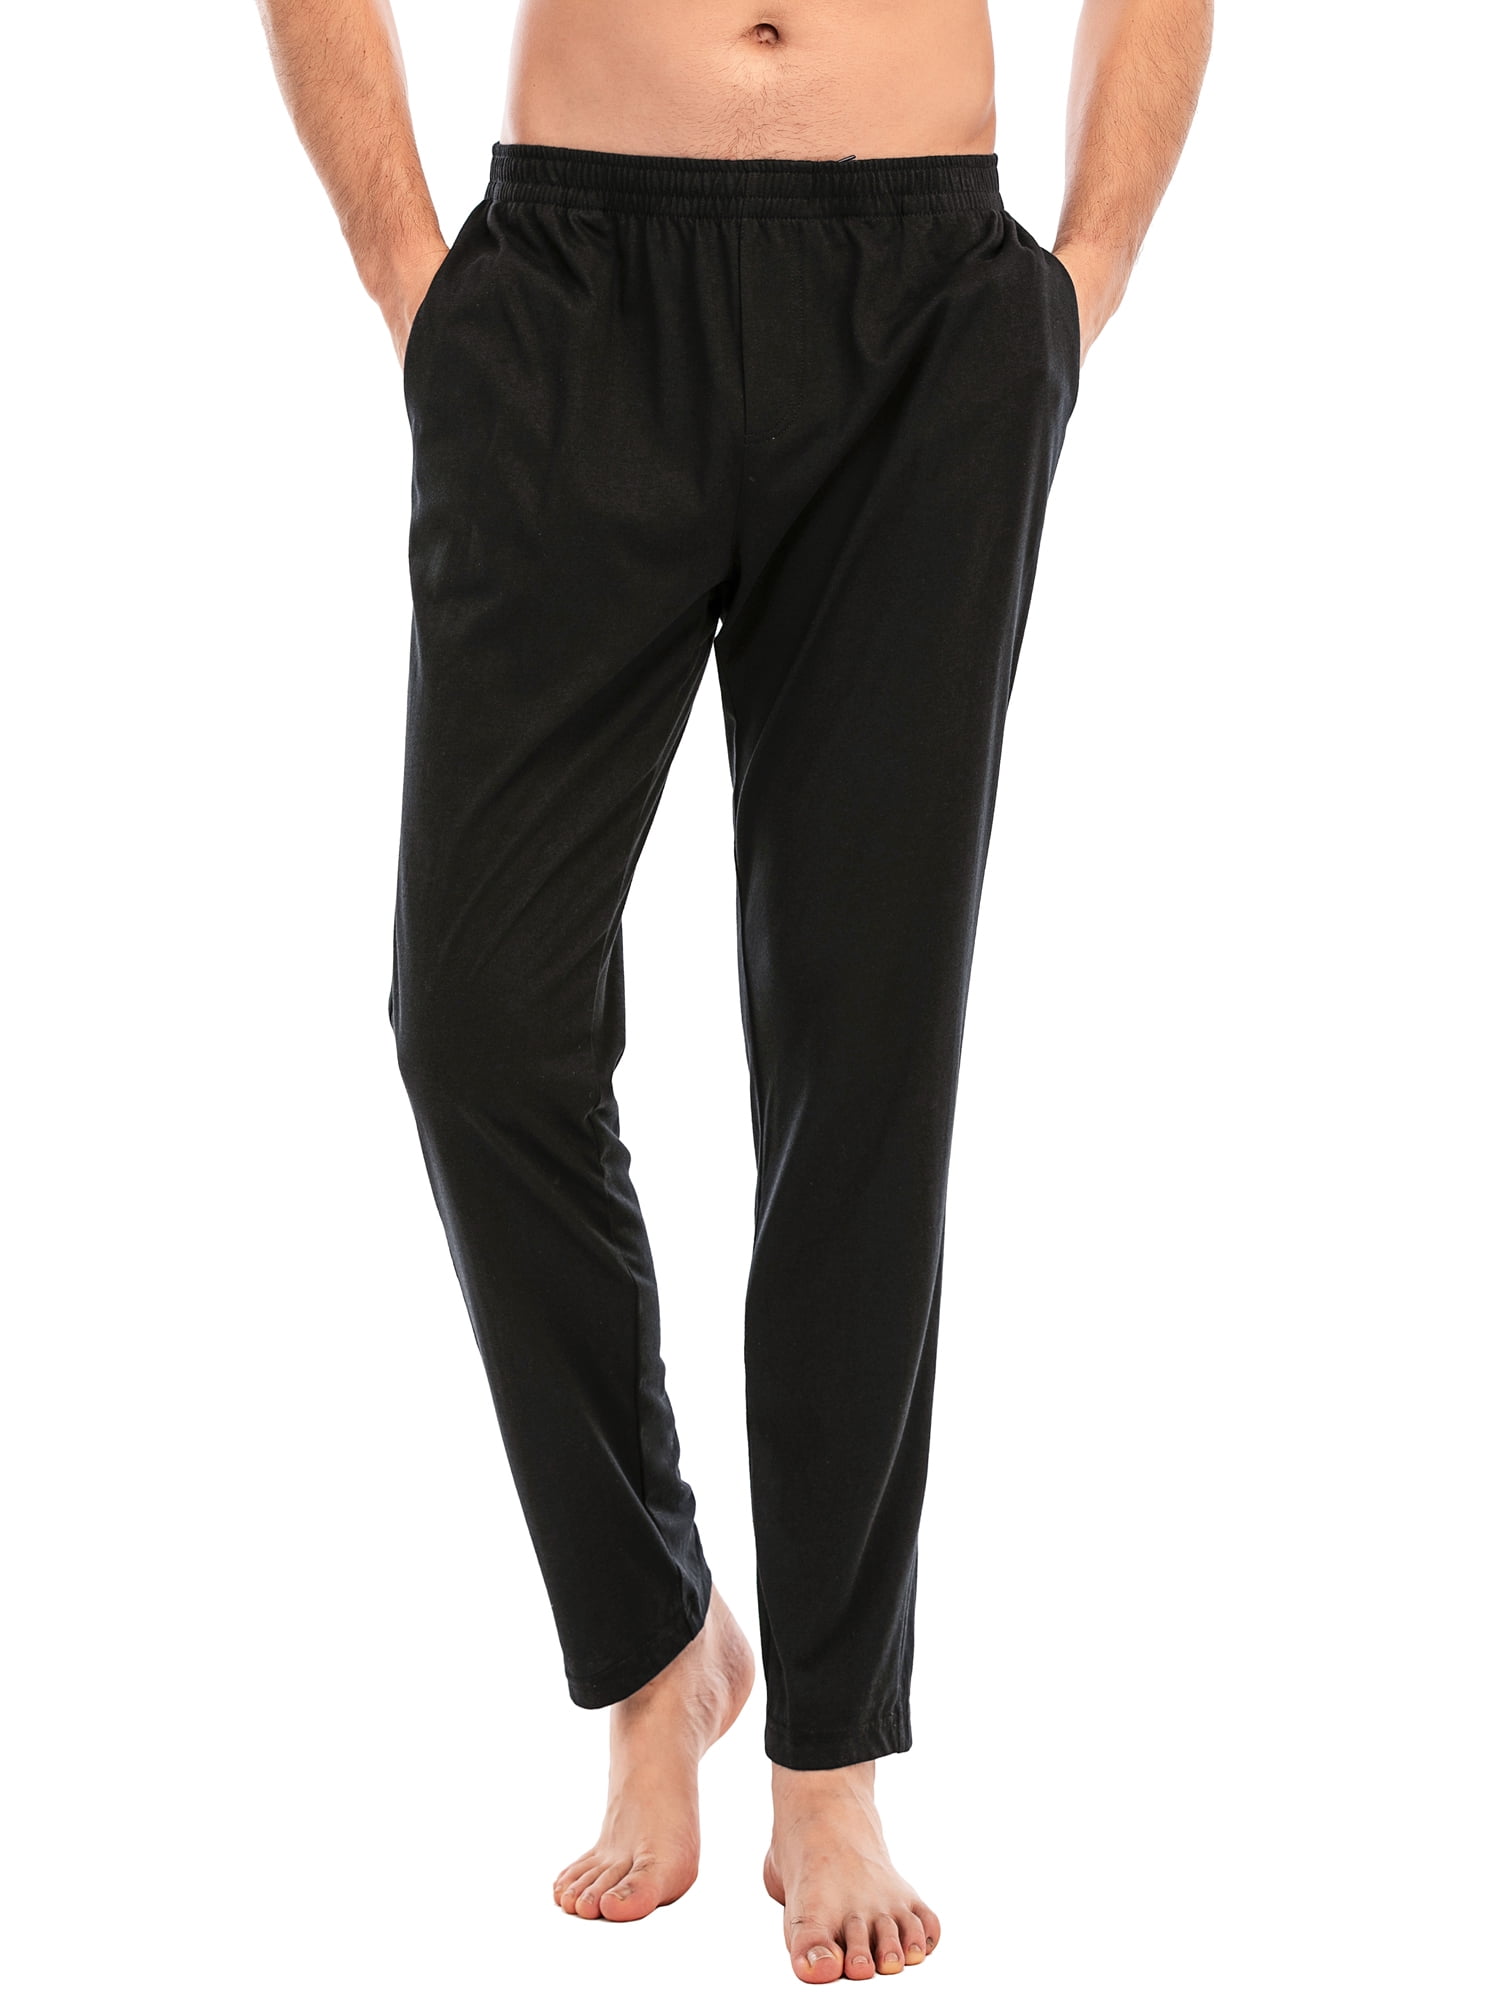 Elonglin Mens Pyjama Shorts Summer Modal Lounge Shorts Bottoms Ultra Soft Elastic Waist Sleepwear Nightwear 